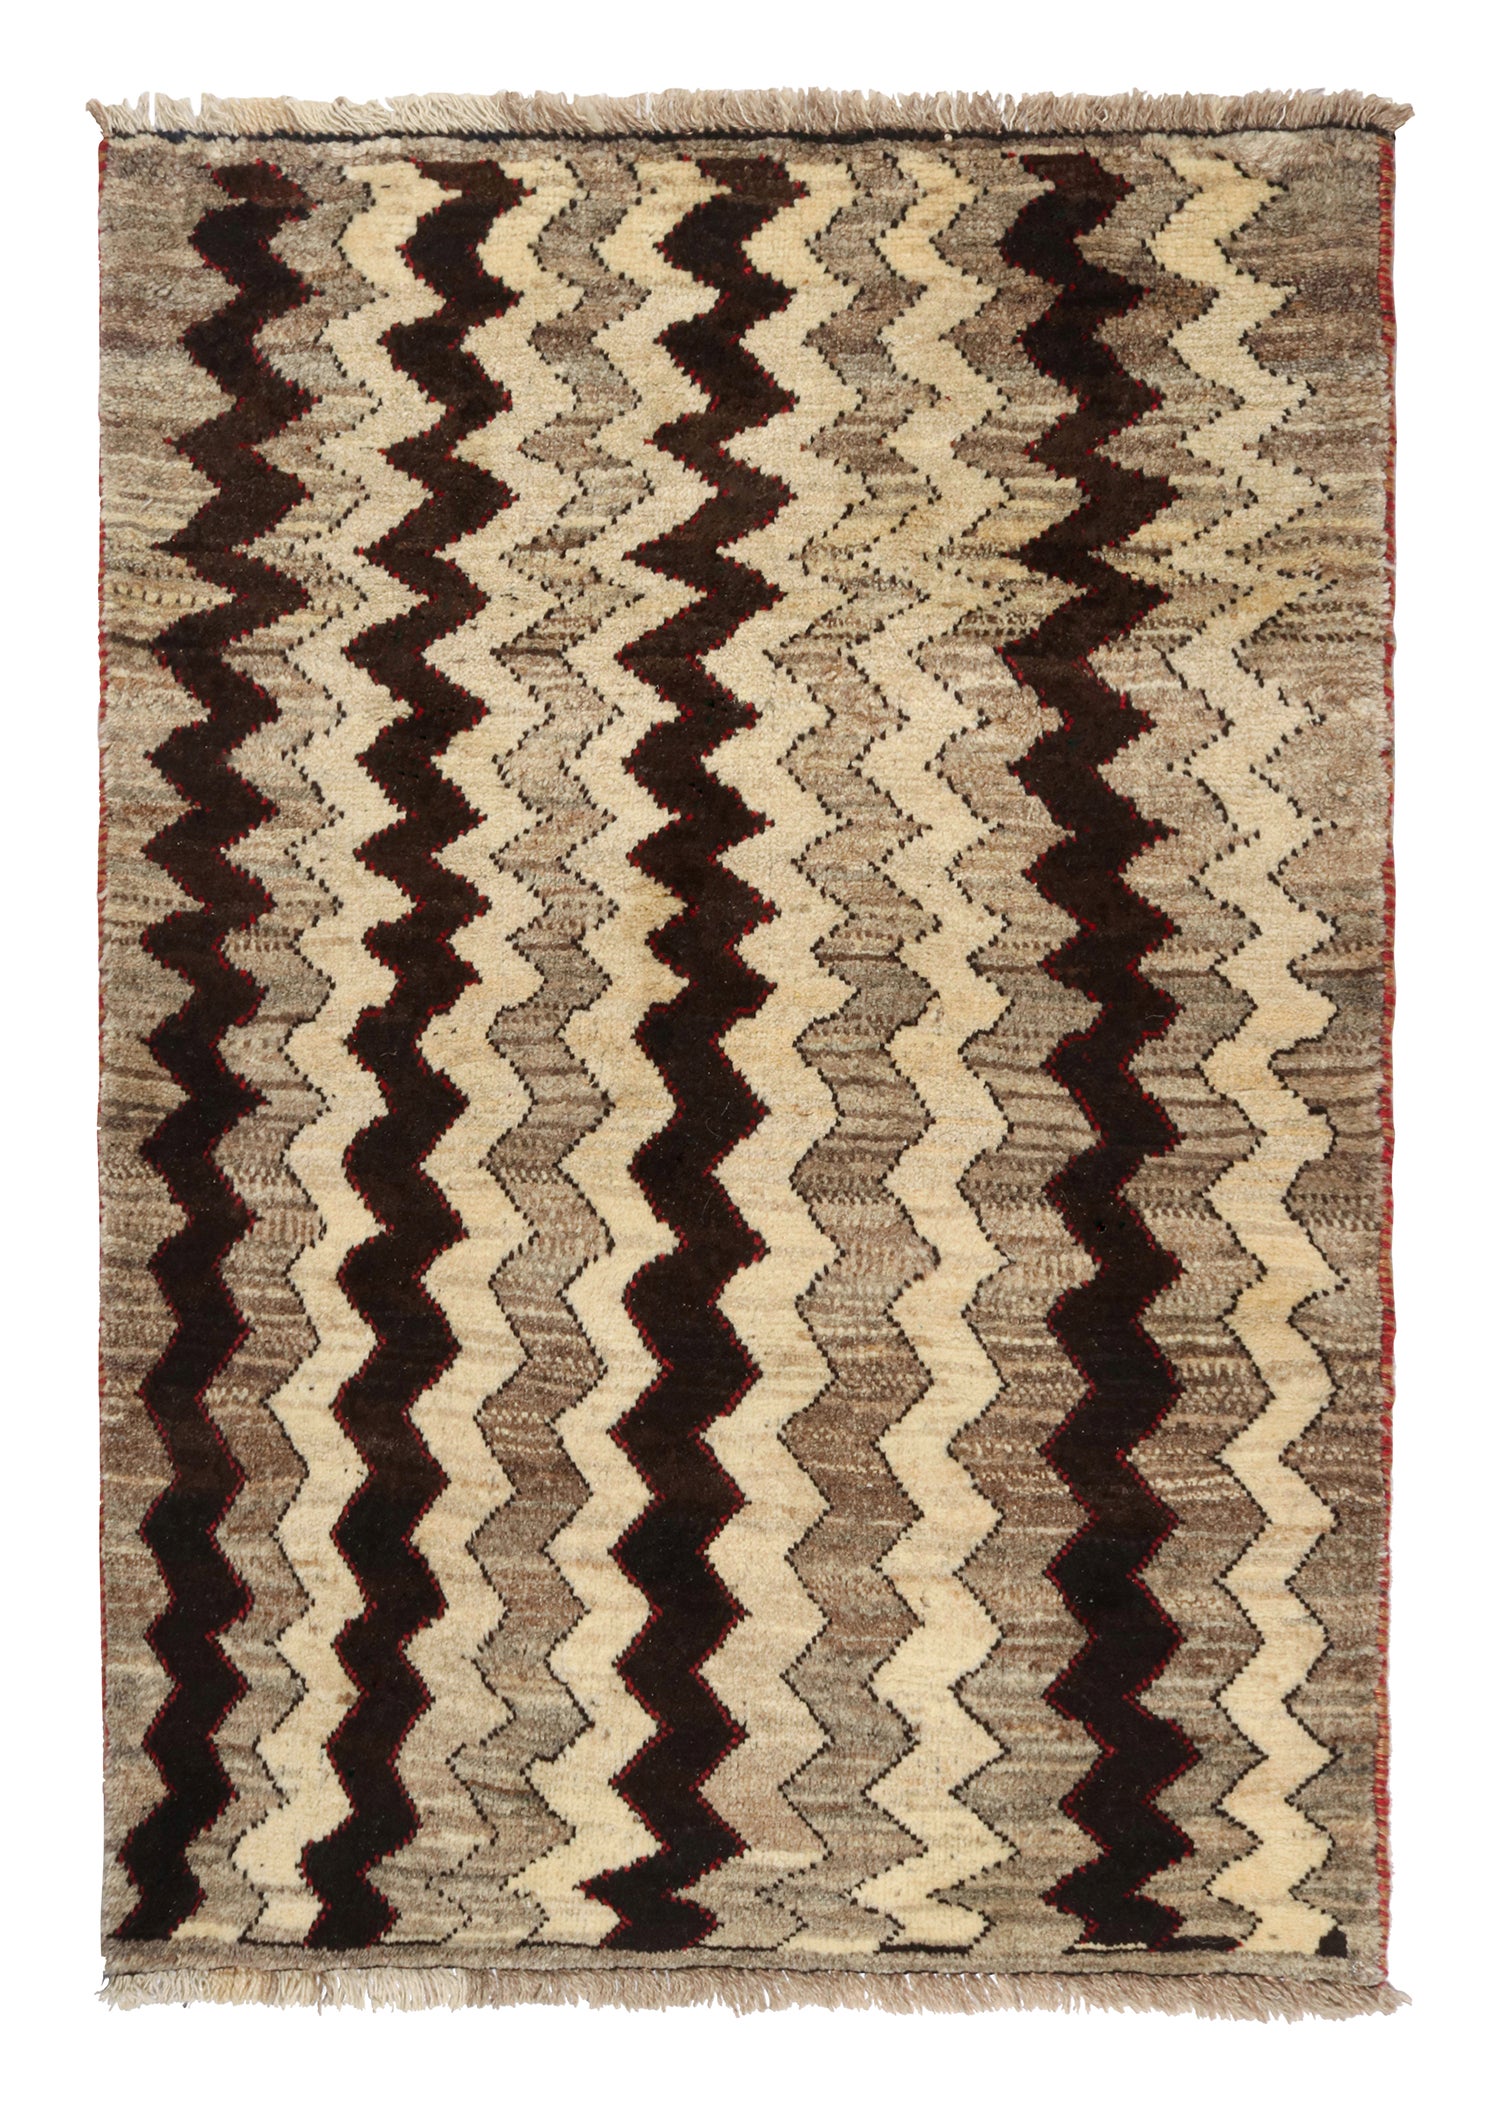 Vintage Gabbeh Tribal Rug in Beige-Brown & Black Chevron Patterns by Rug & Kilim For Sale